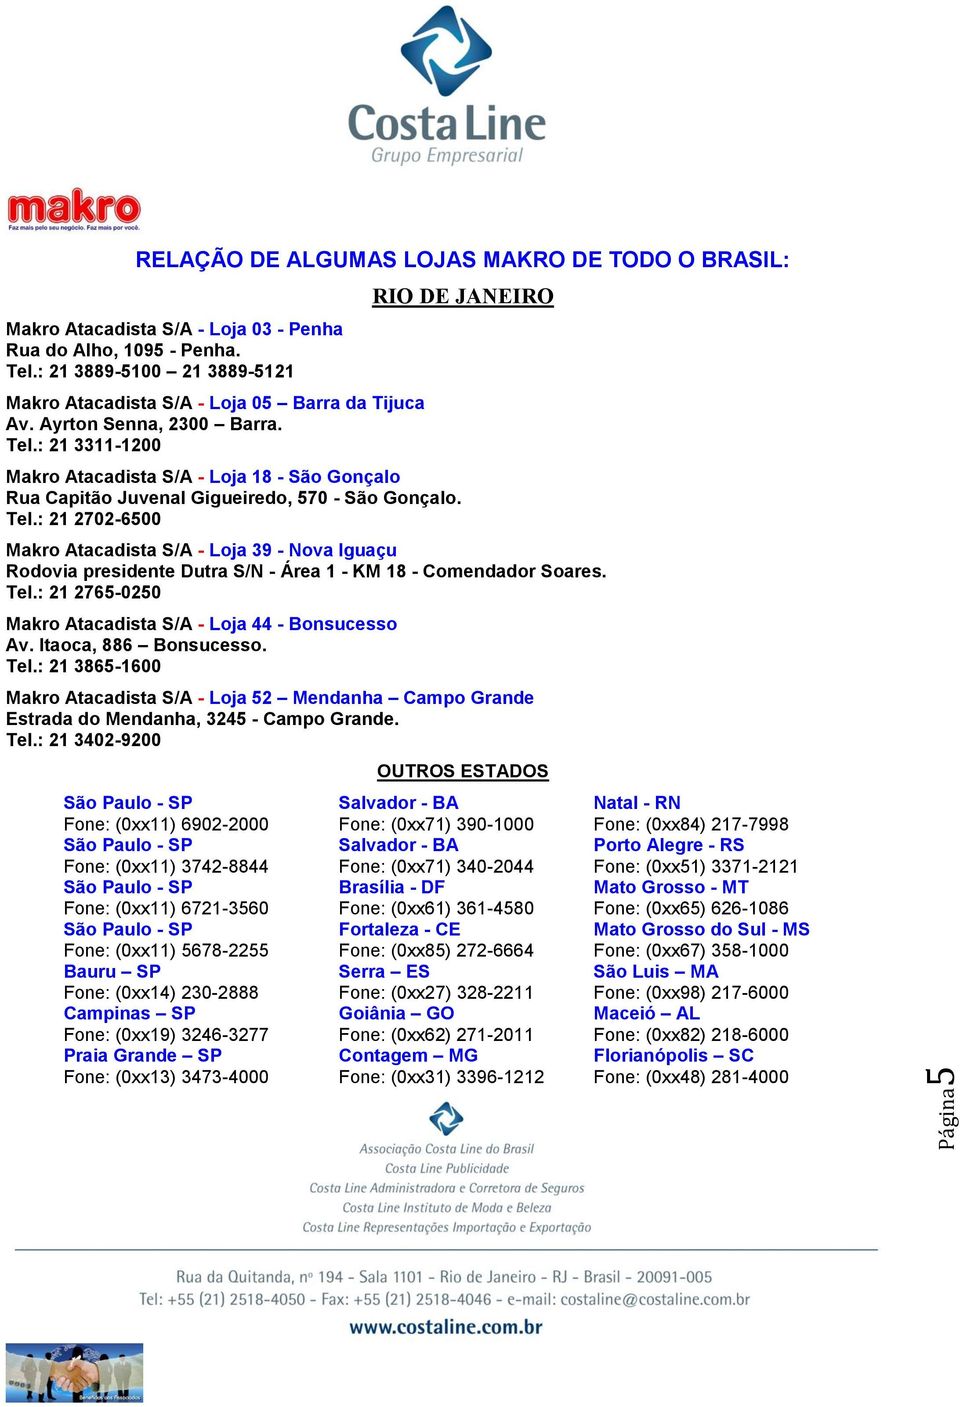 Tel.: 21 2765-0250 Makro Atacadista S/A - Loja 44 - Bonsucesso Av. Itaoca, 886 Bonsucesso. Tel.